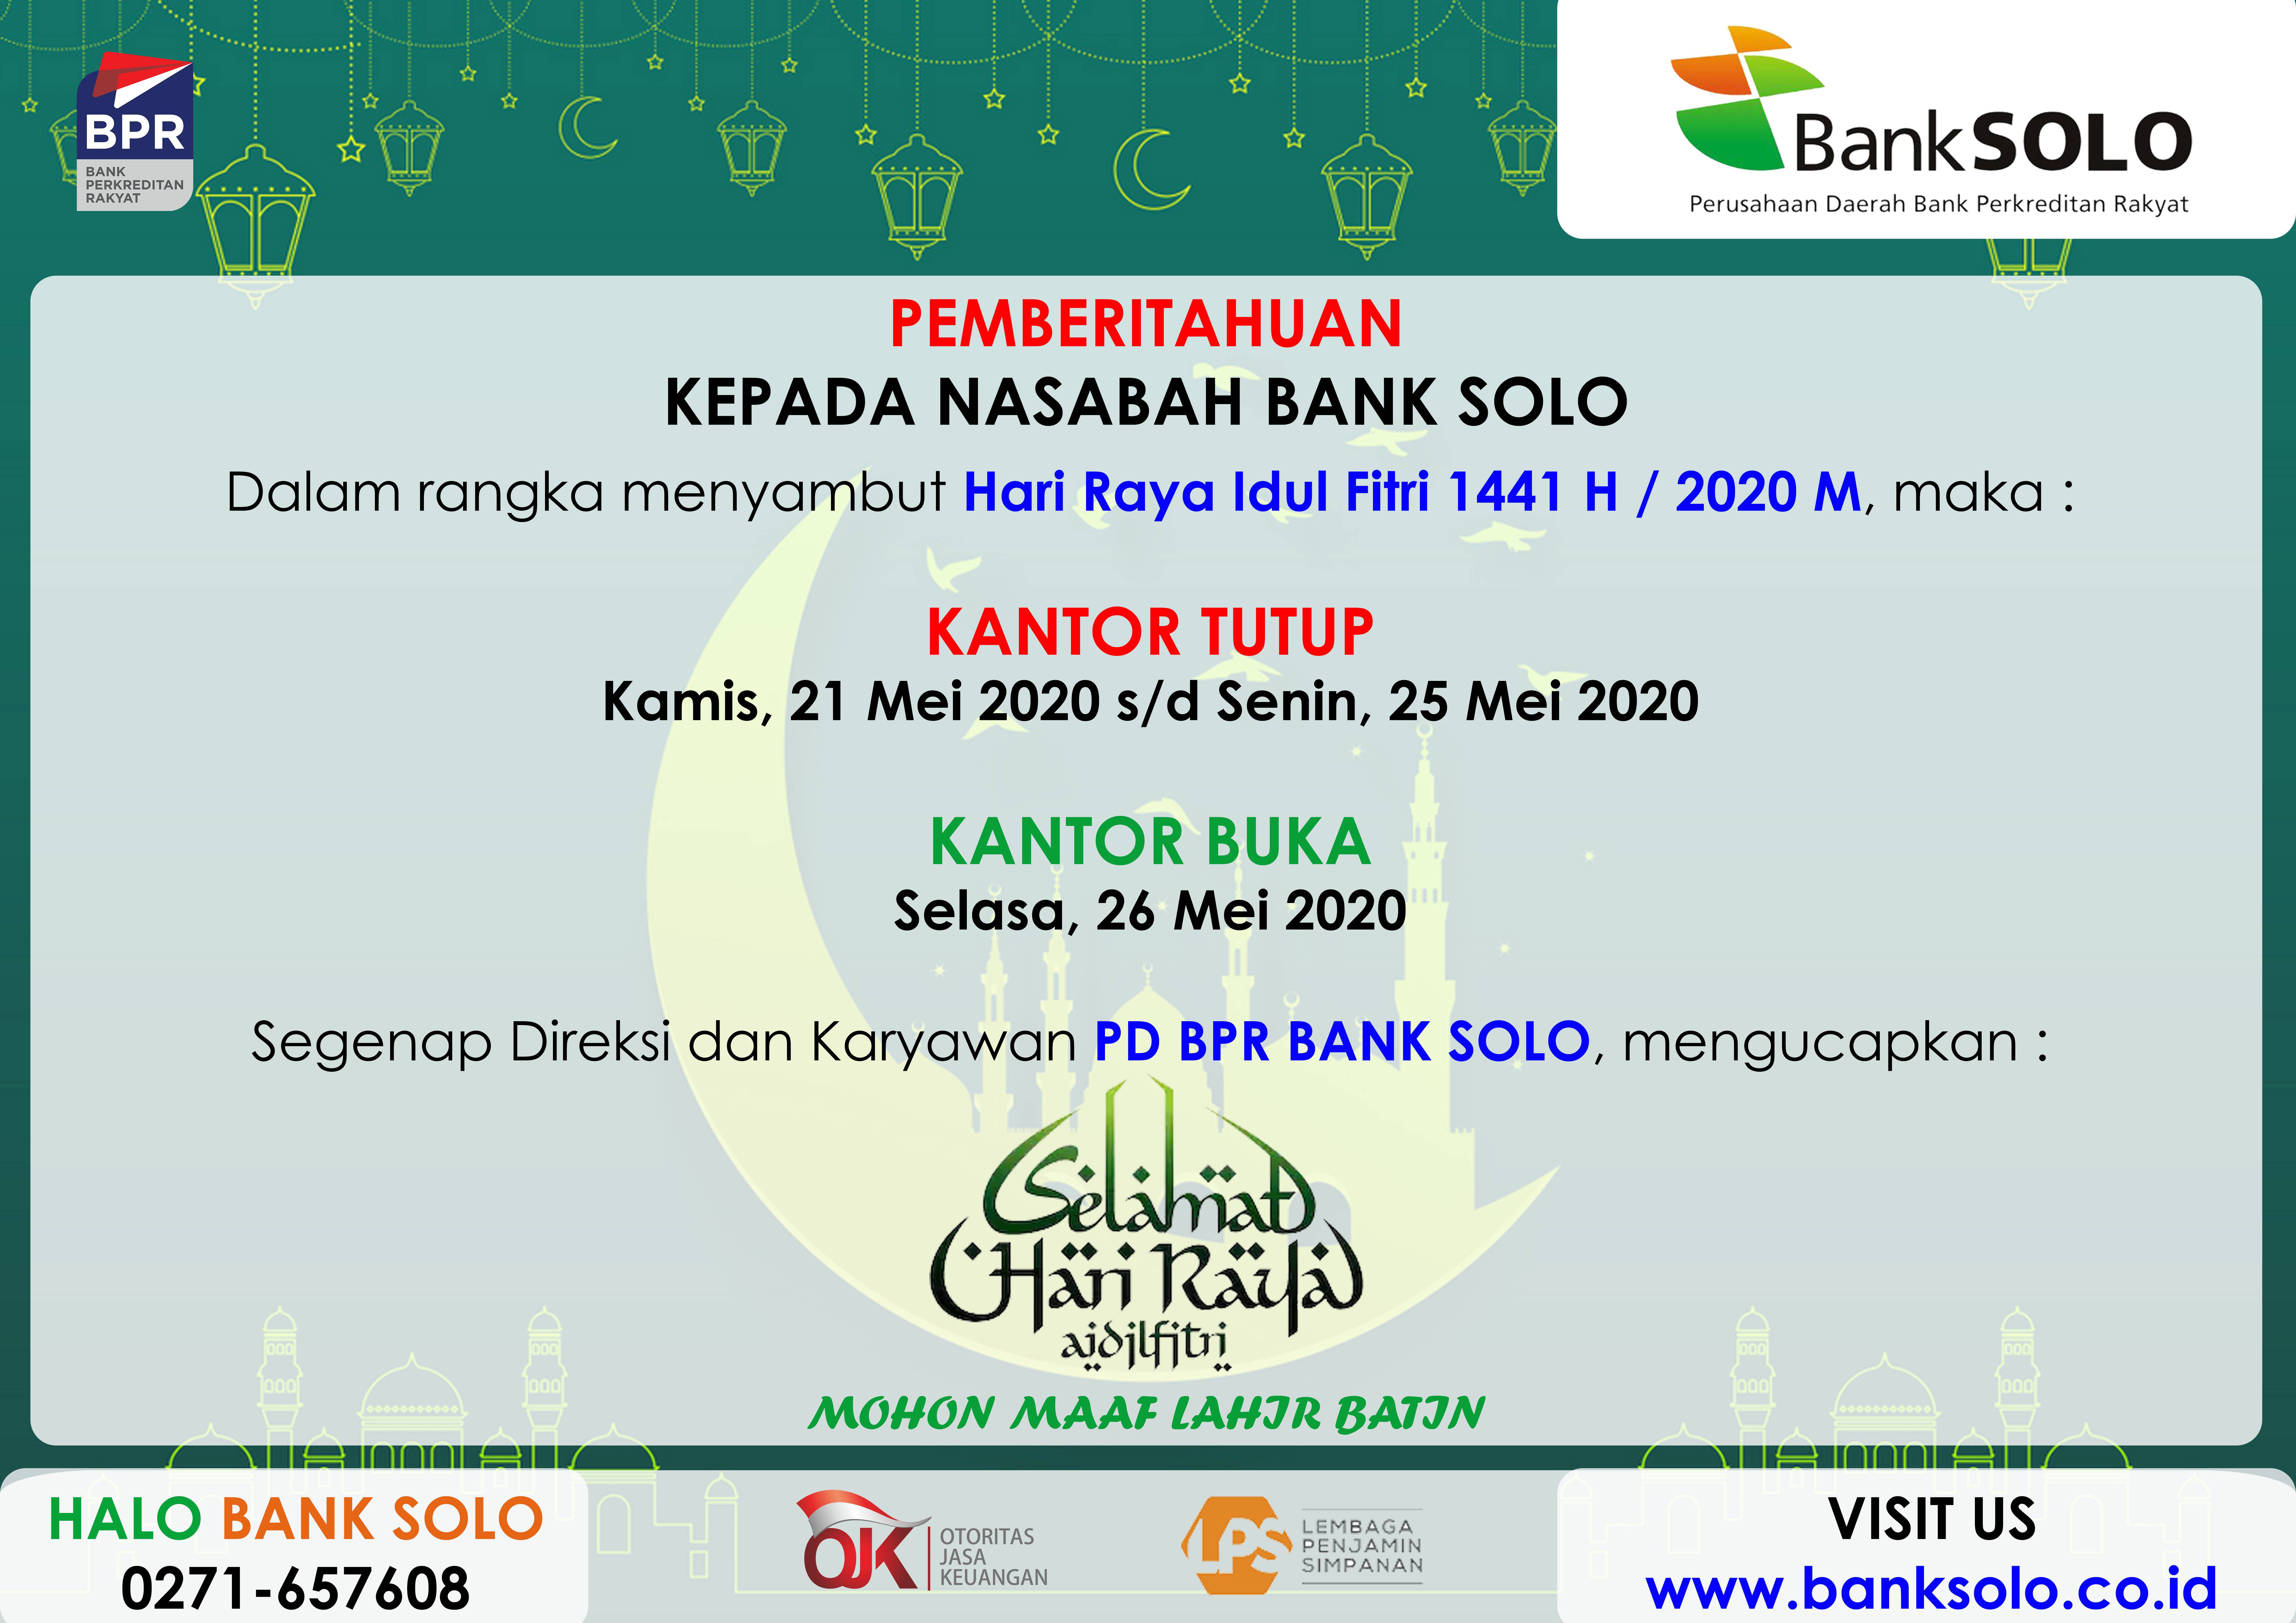 BANK SOLO